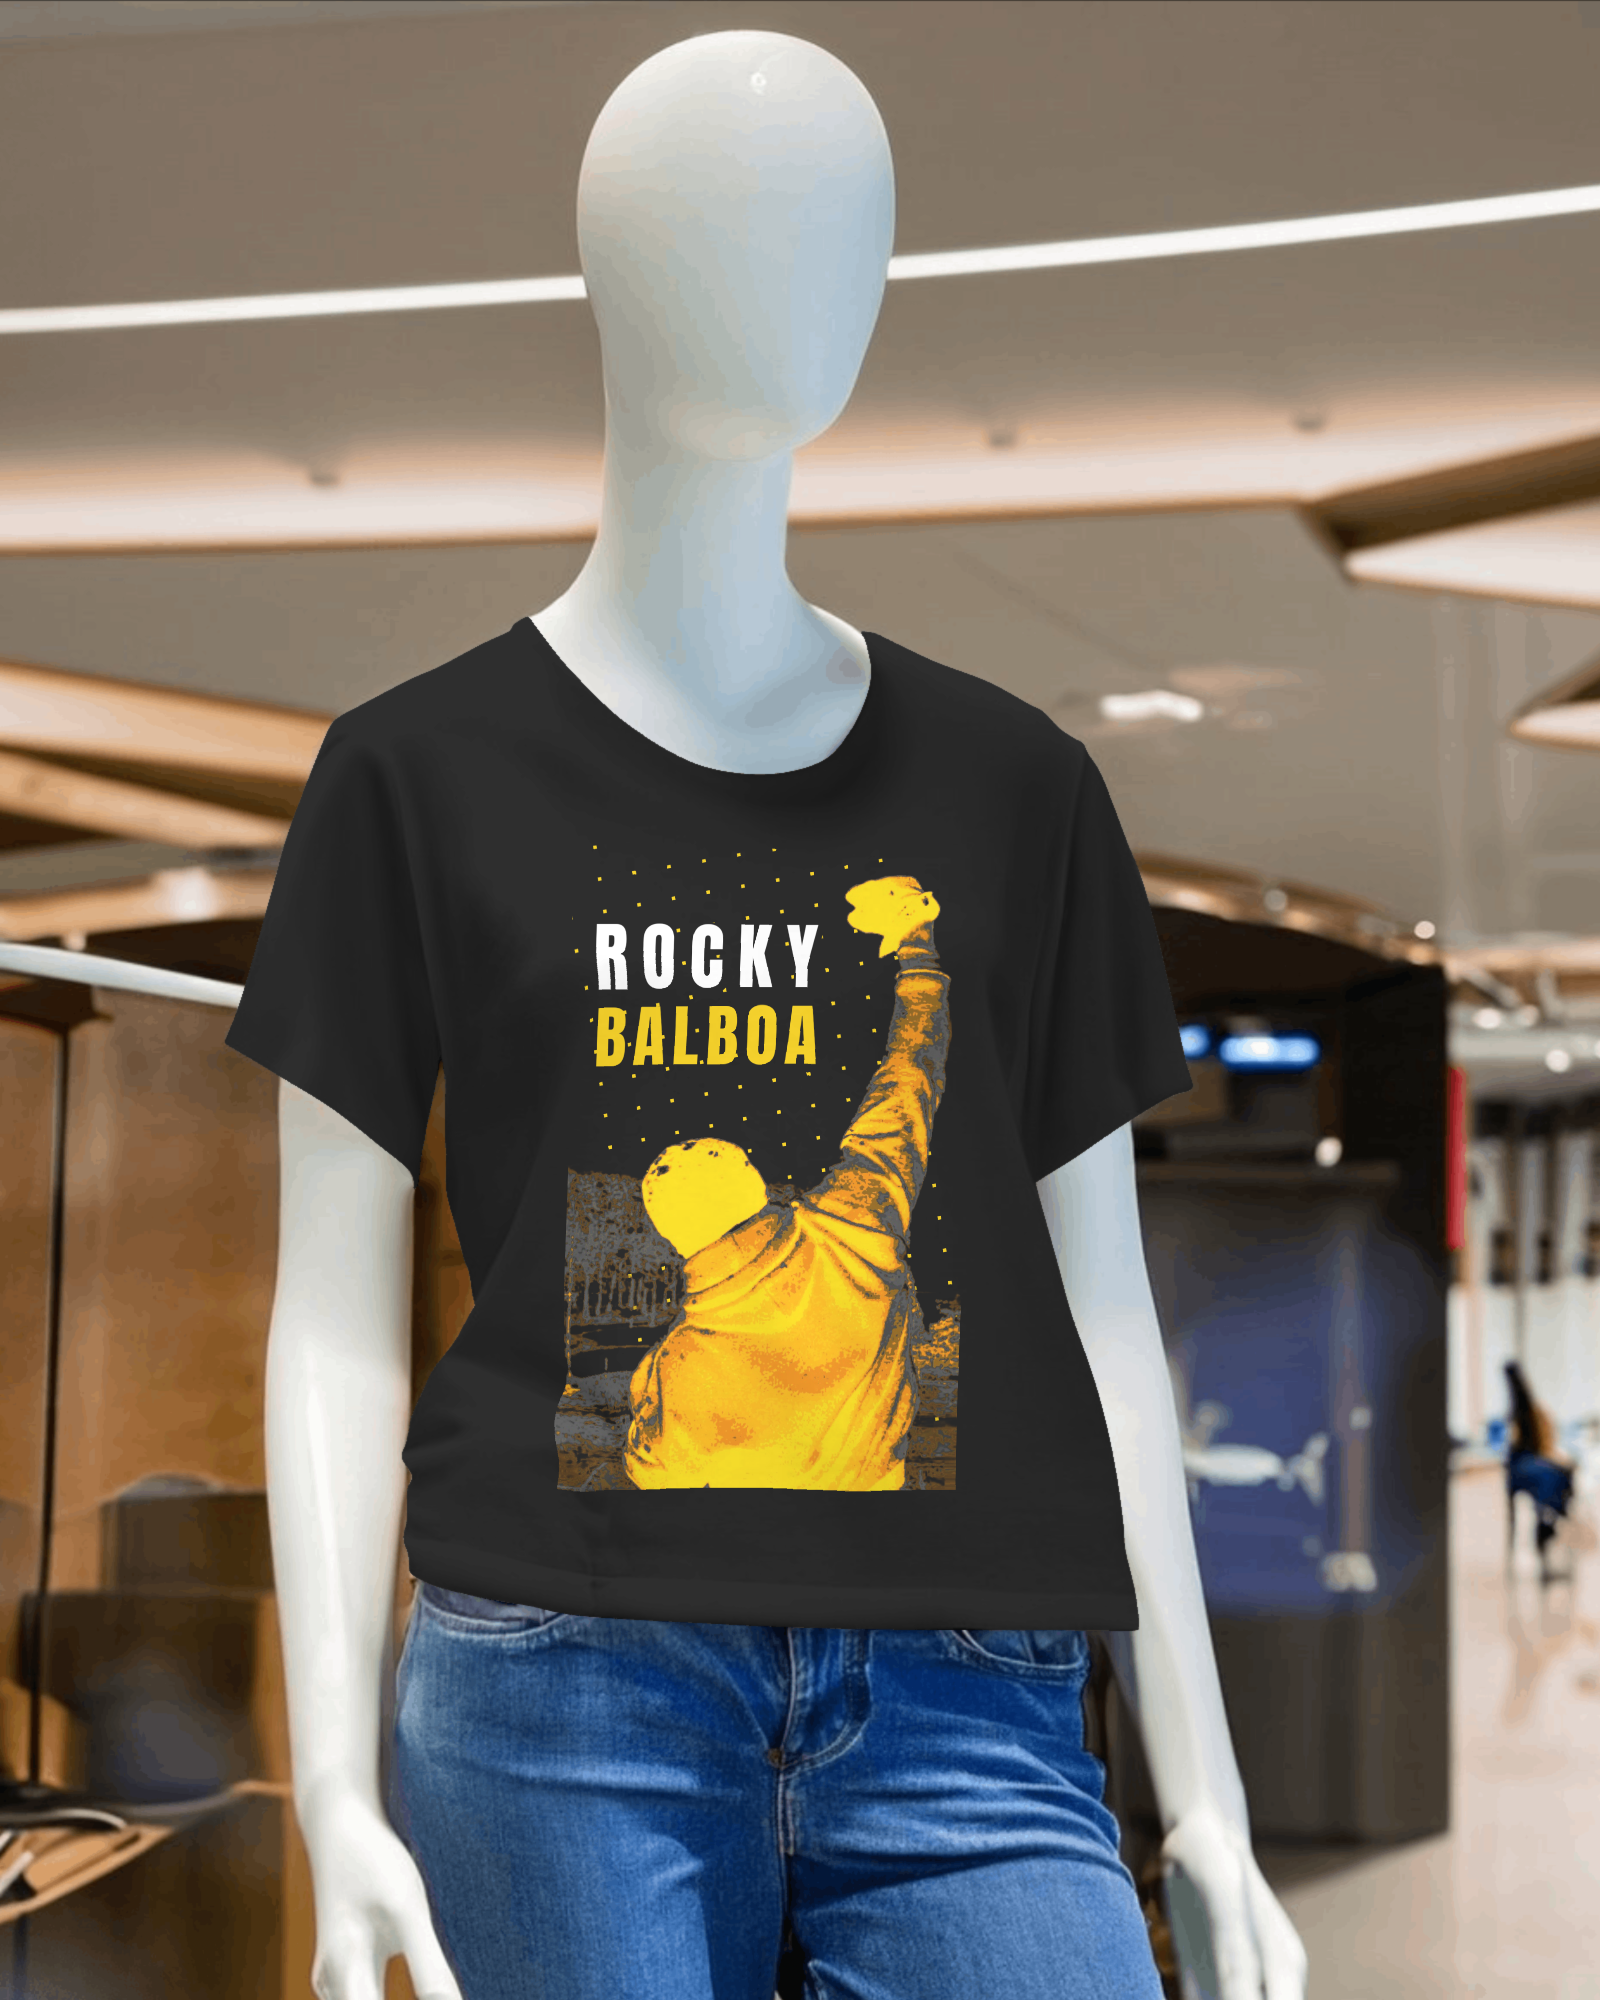 "ROCKY BALBOA" Poster Printed Tshirt - Black